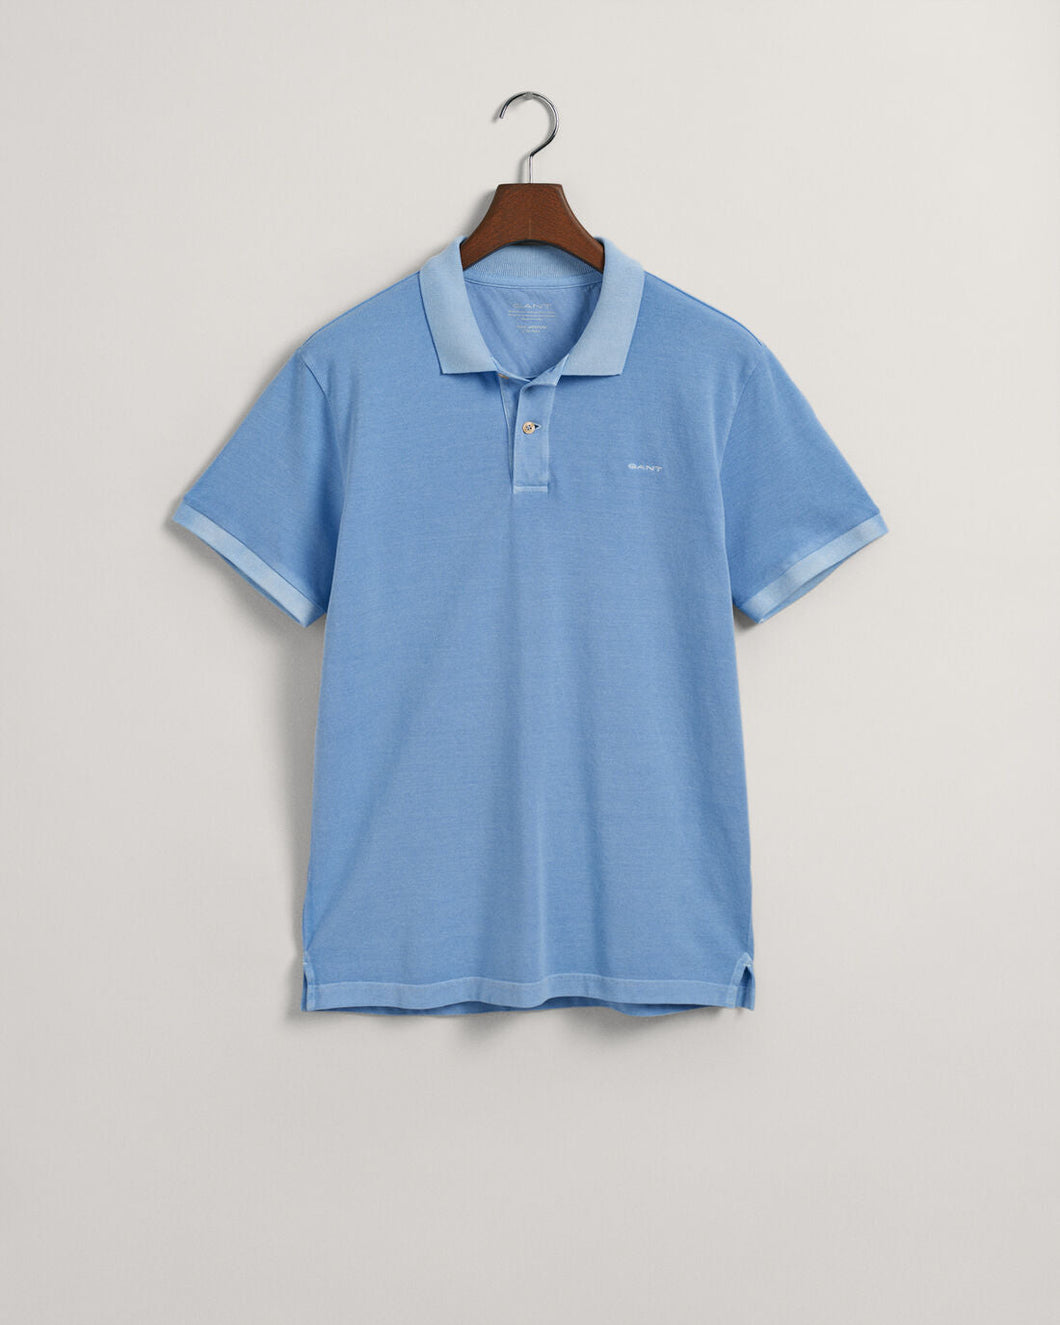 GANT - 3XL - Sunfaded Piqué Polo Shirt, Gentle Blue